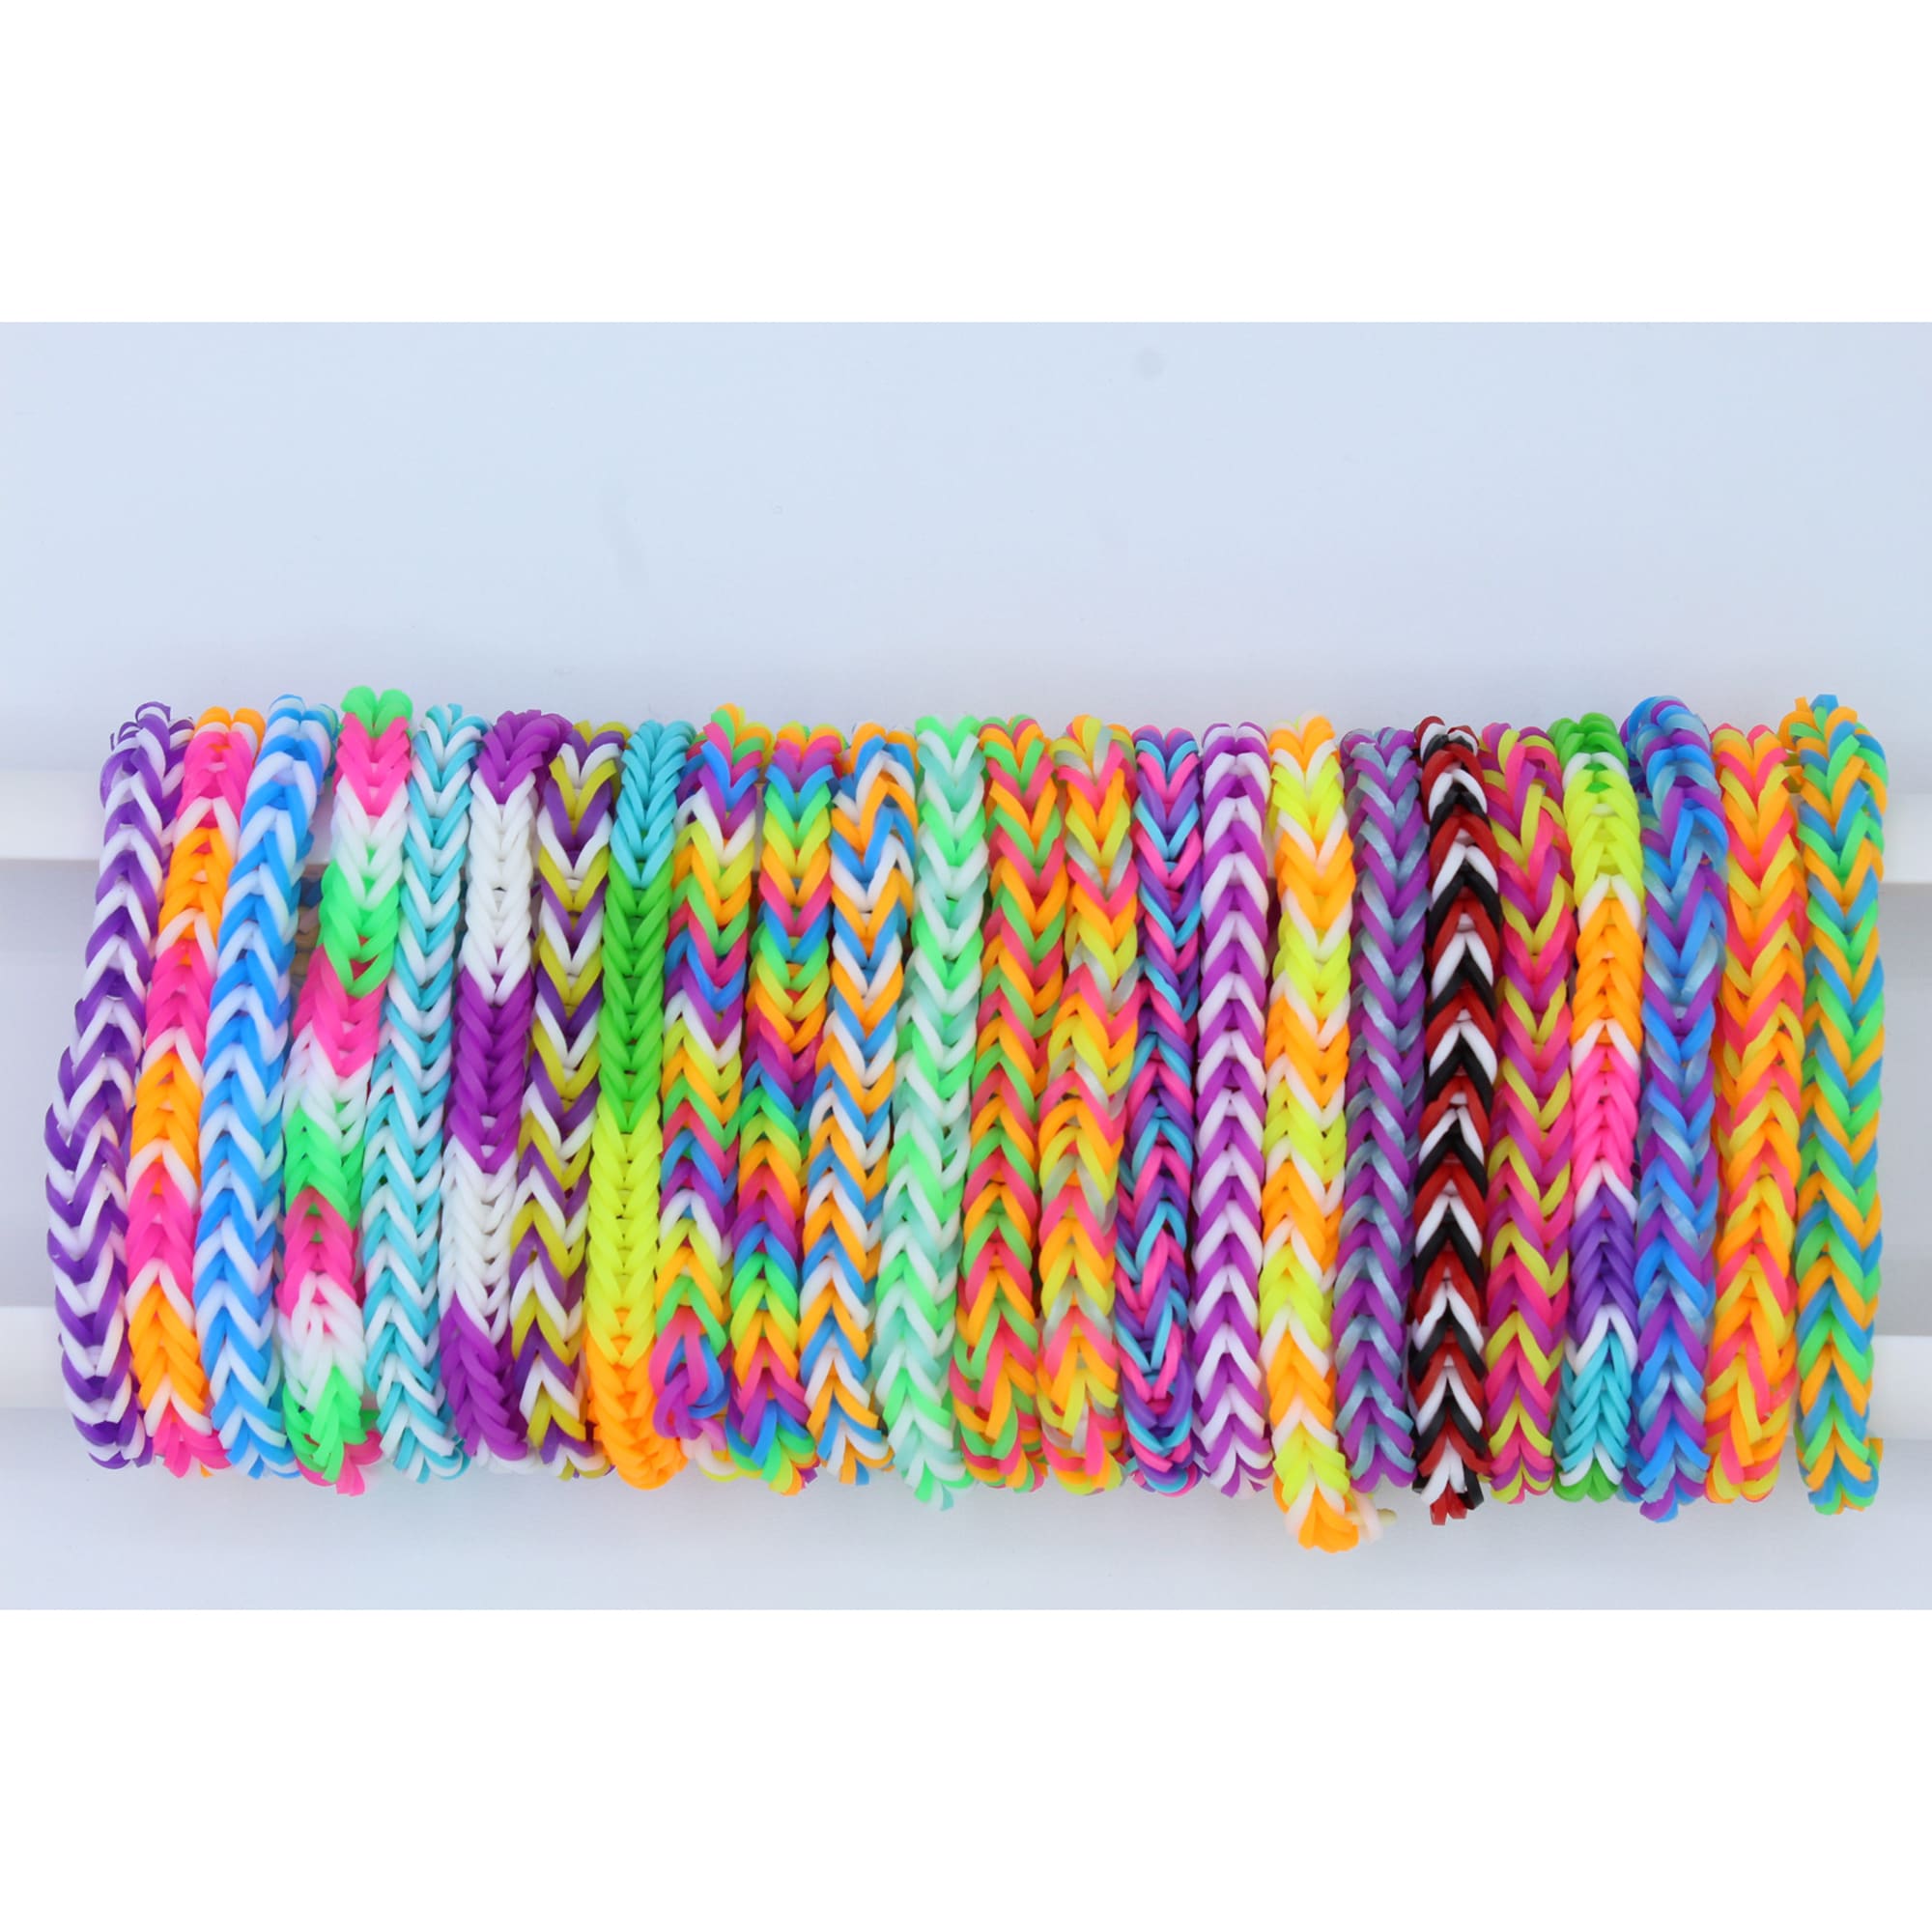 Rainbow Loom Creative Play Bracelet Craft Kit - Assorted Rubber